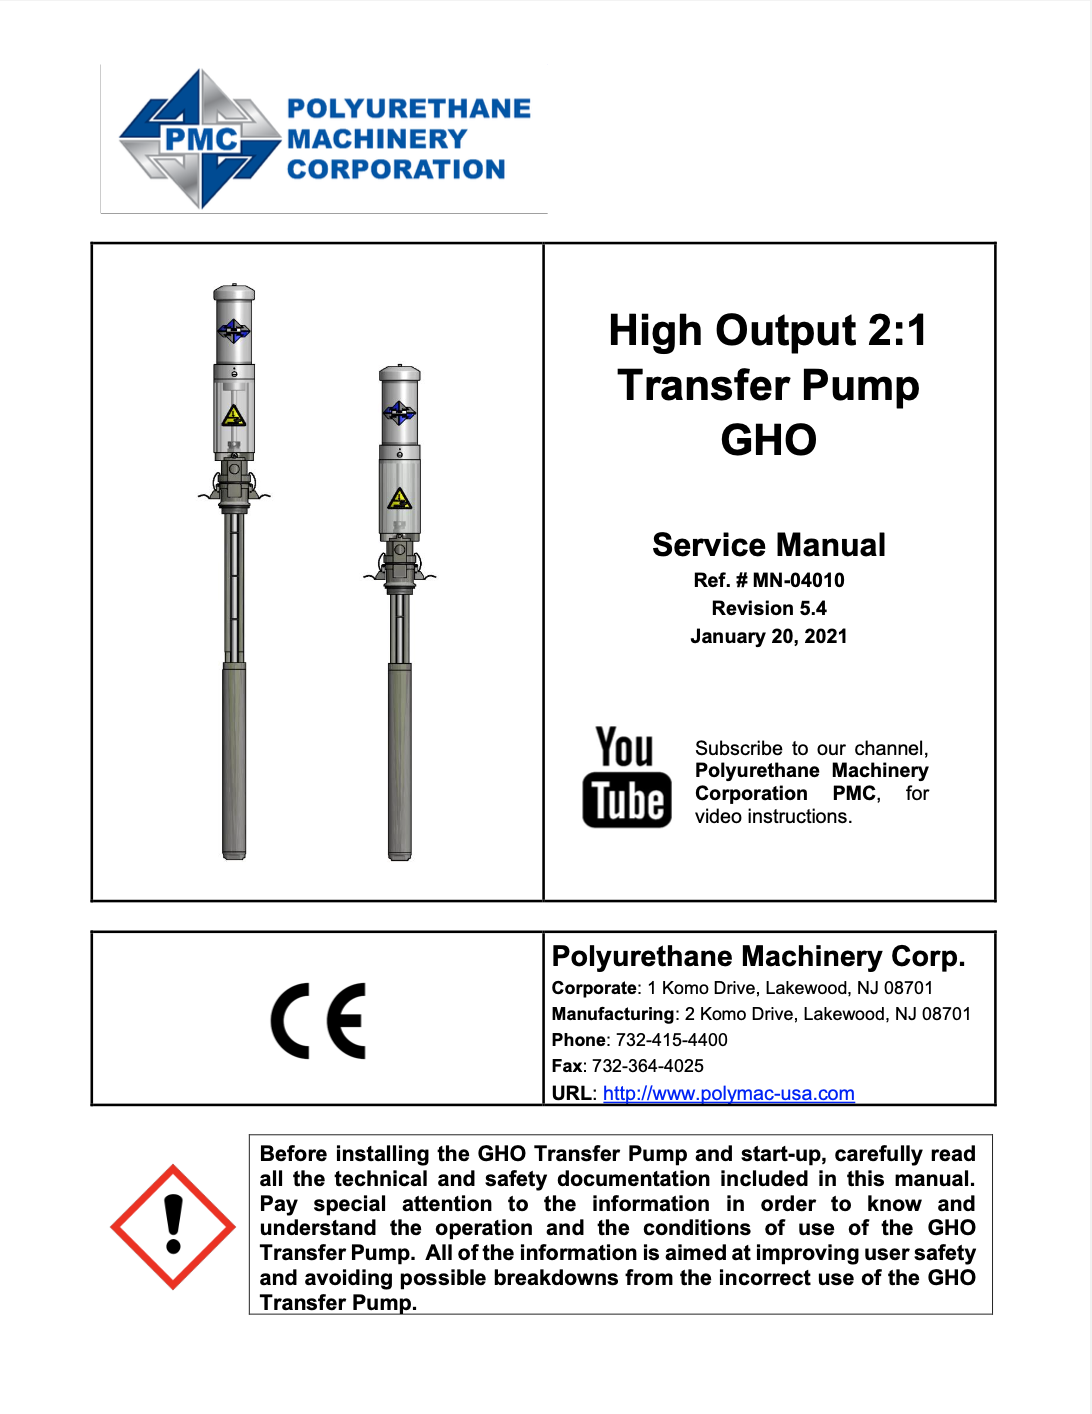 High Output 2:1 Transfer Pump GHO Service Manual